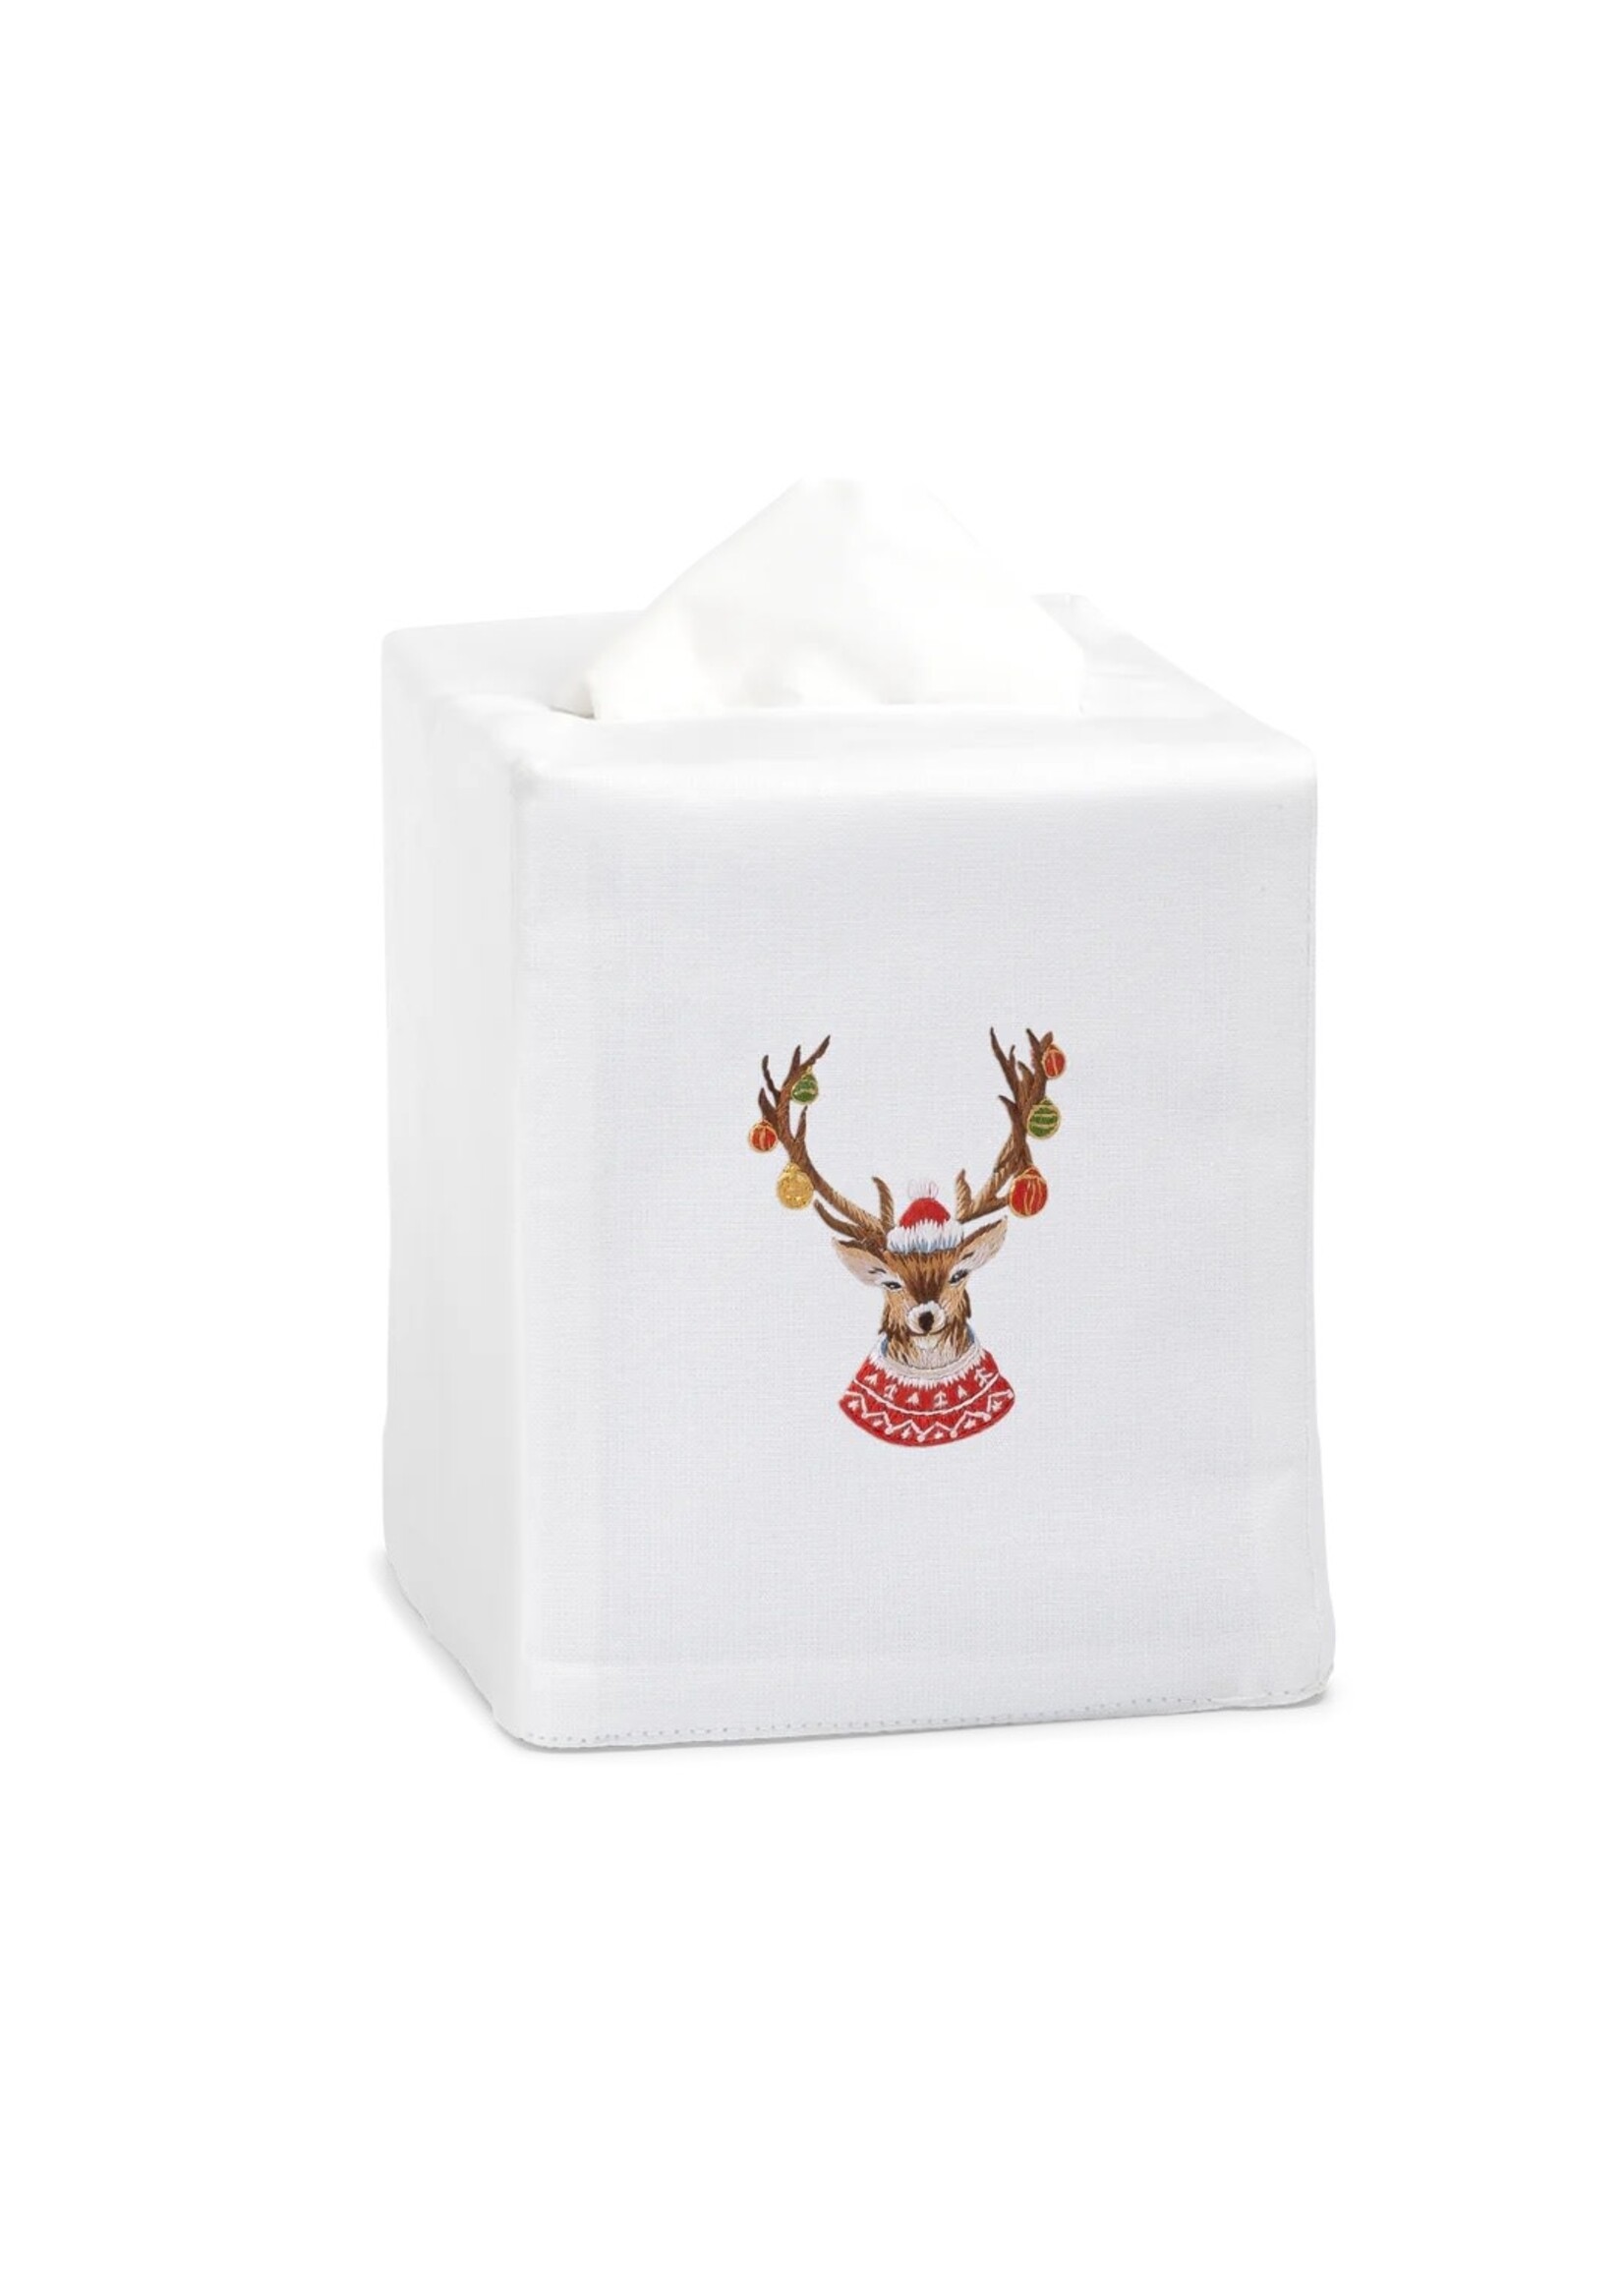 Henry Handwork Tissue Box Cover - Ornament Antlers